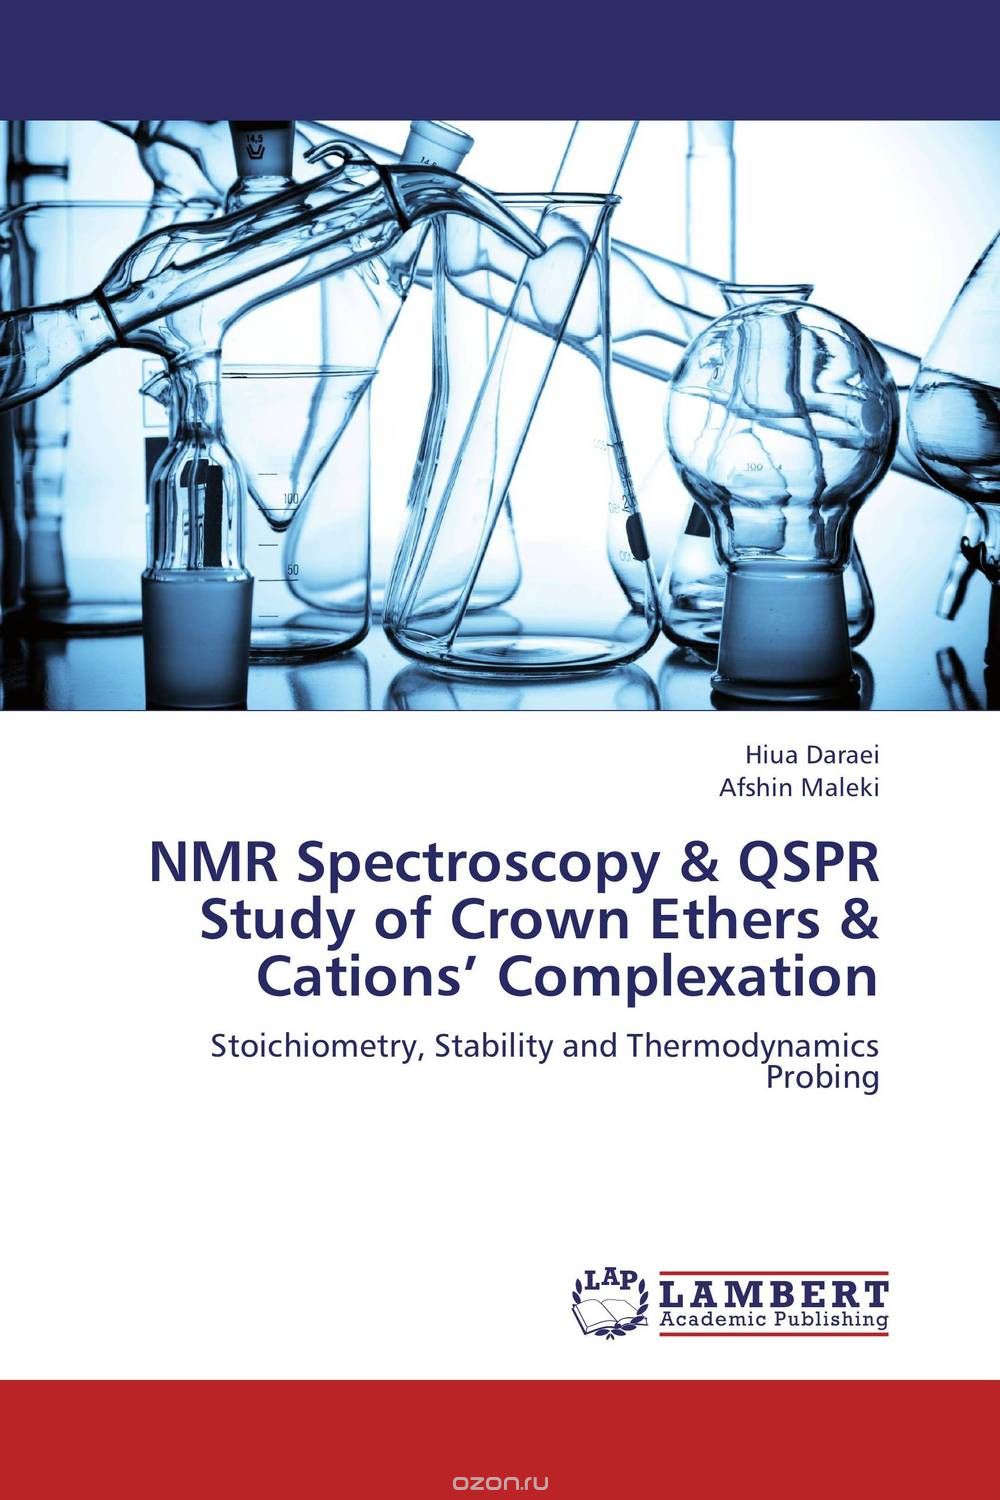 Скачать книгу "NMR Spectroscopy & QSPR Study of Crown Ethers & Cations’ Complexation"